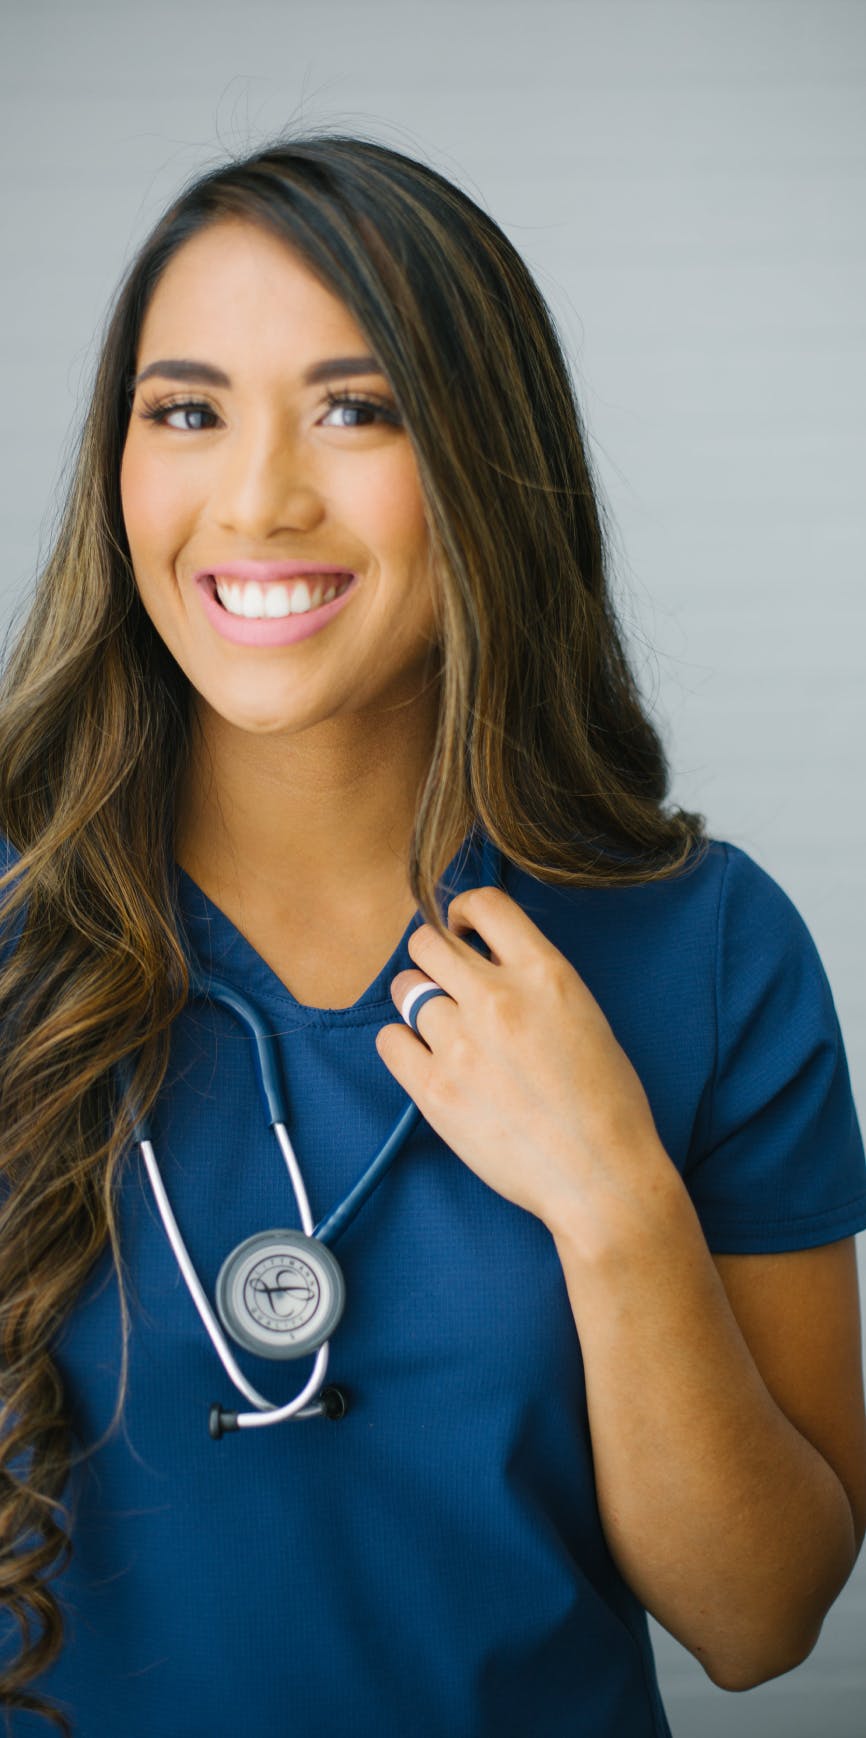 Nurse wearing enso rings and smiling